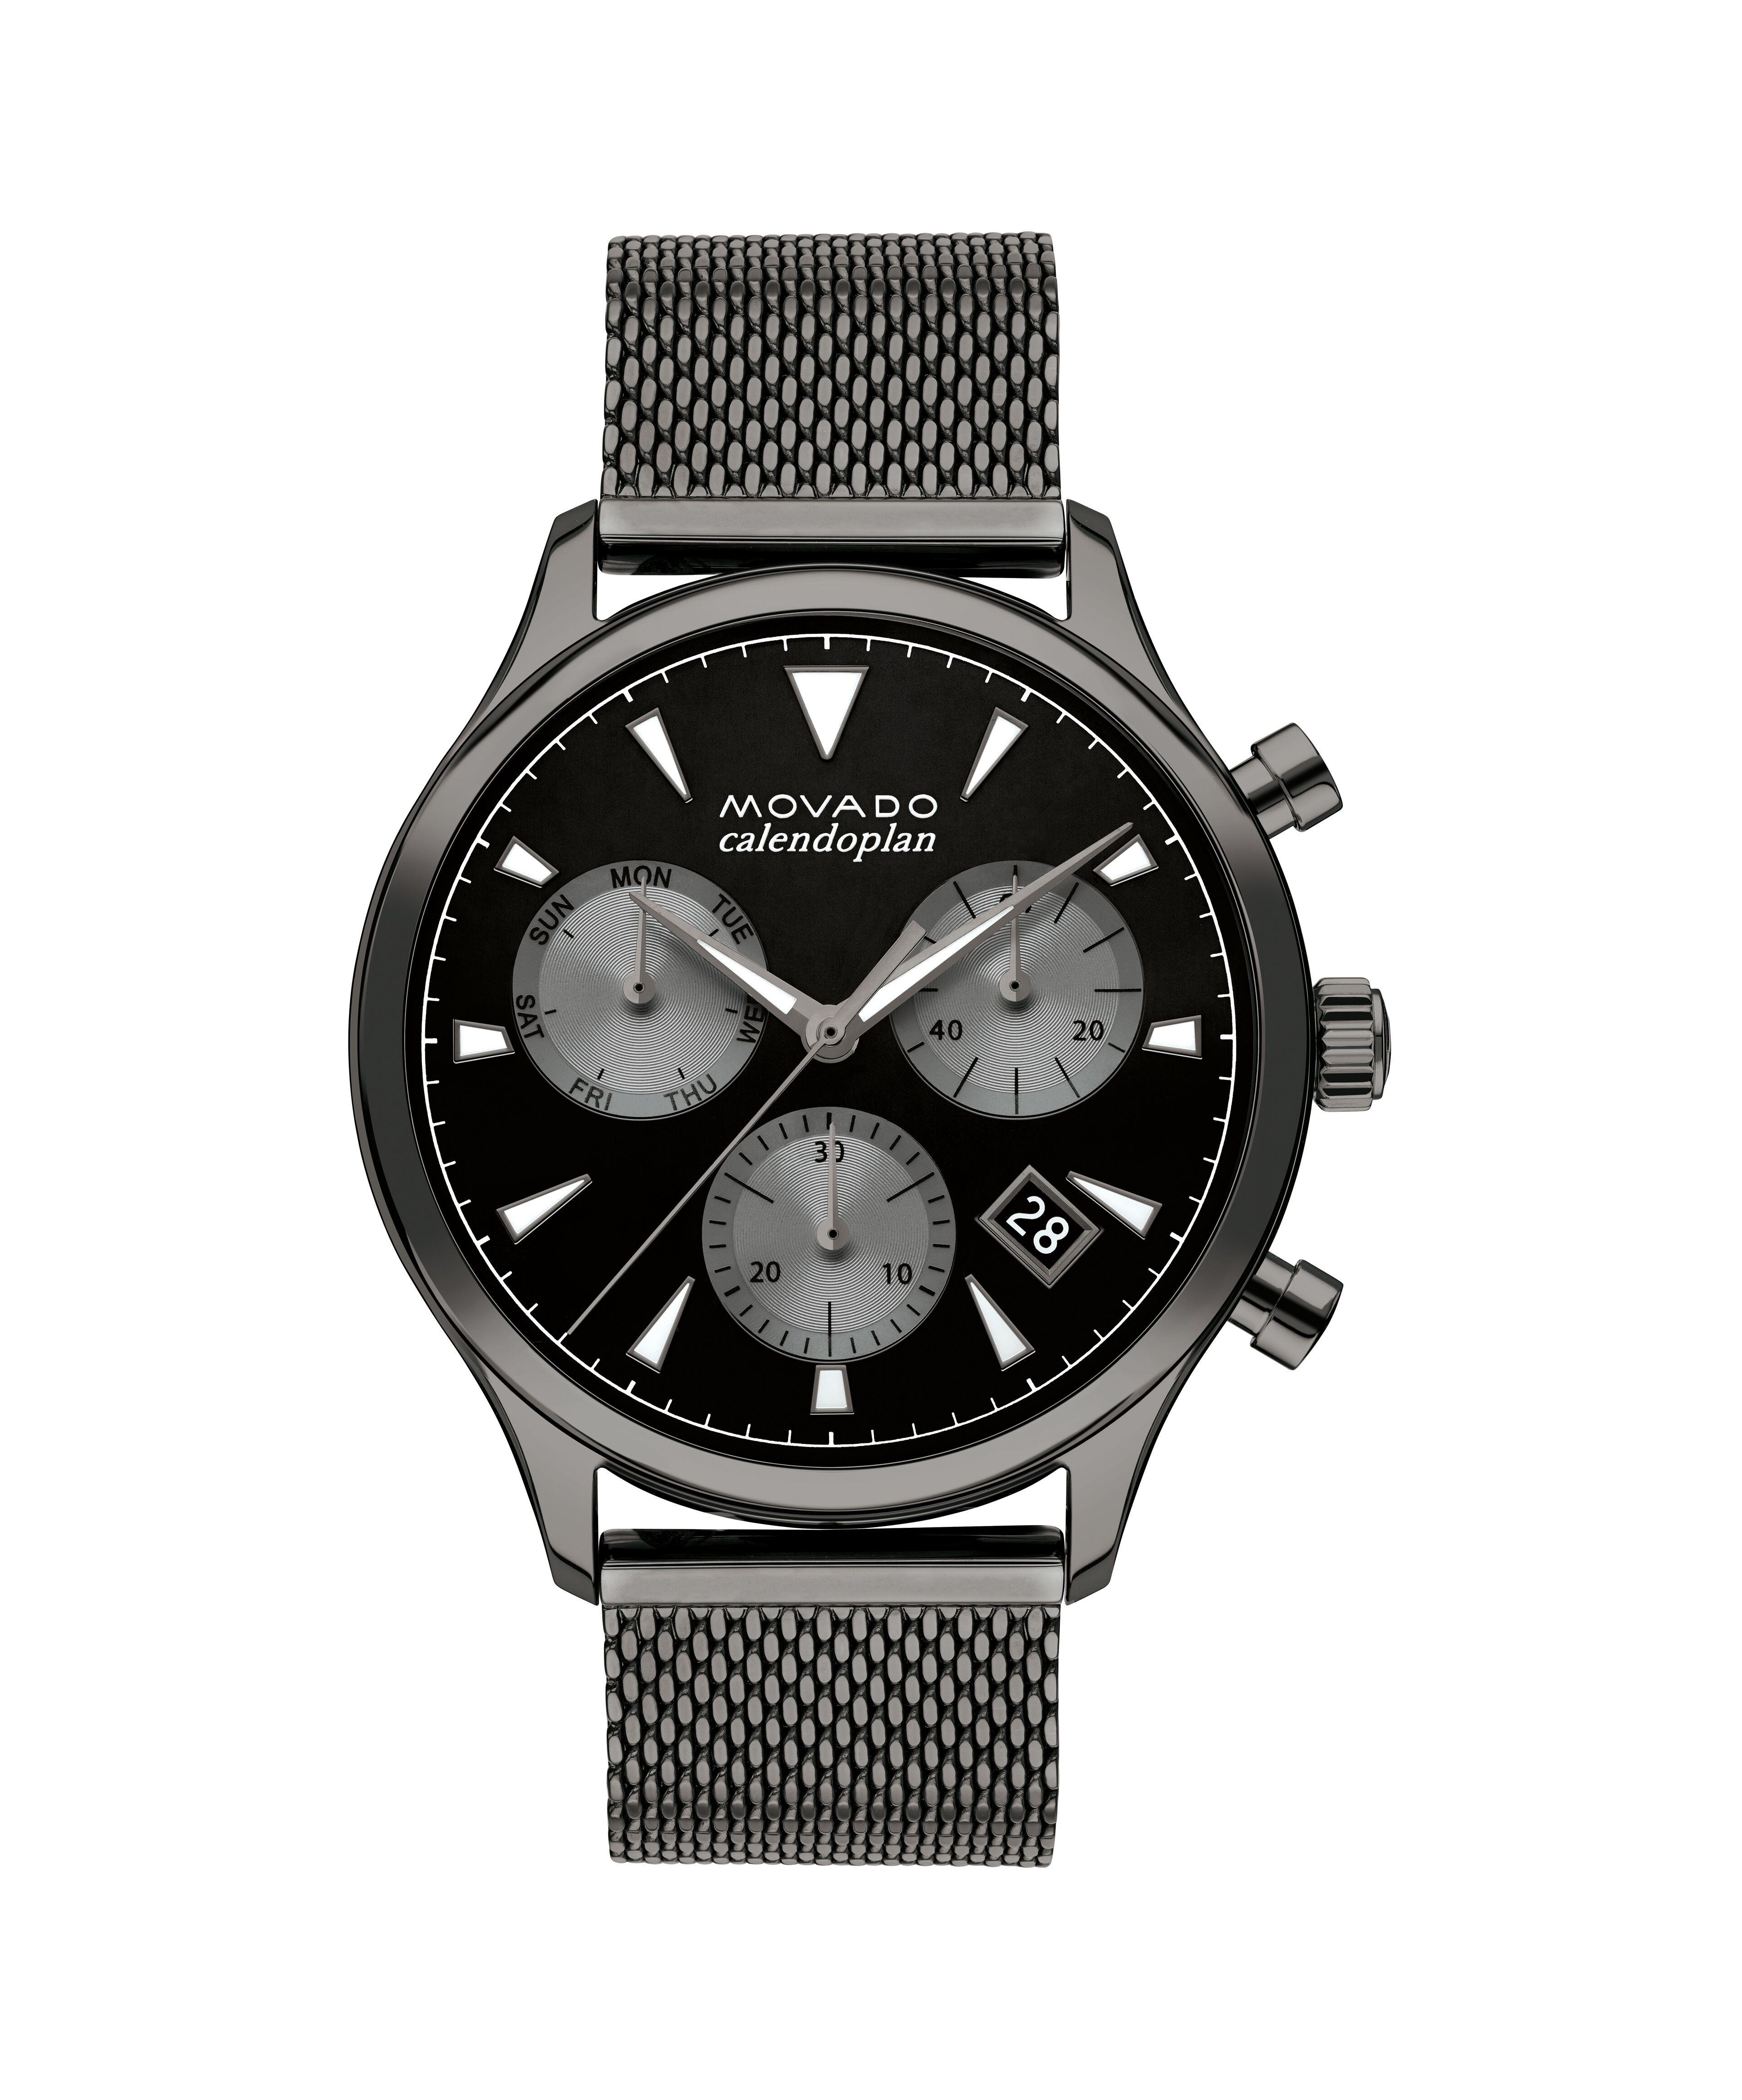 Jareds Galleria Sold Me A Fake Watch